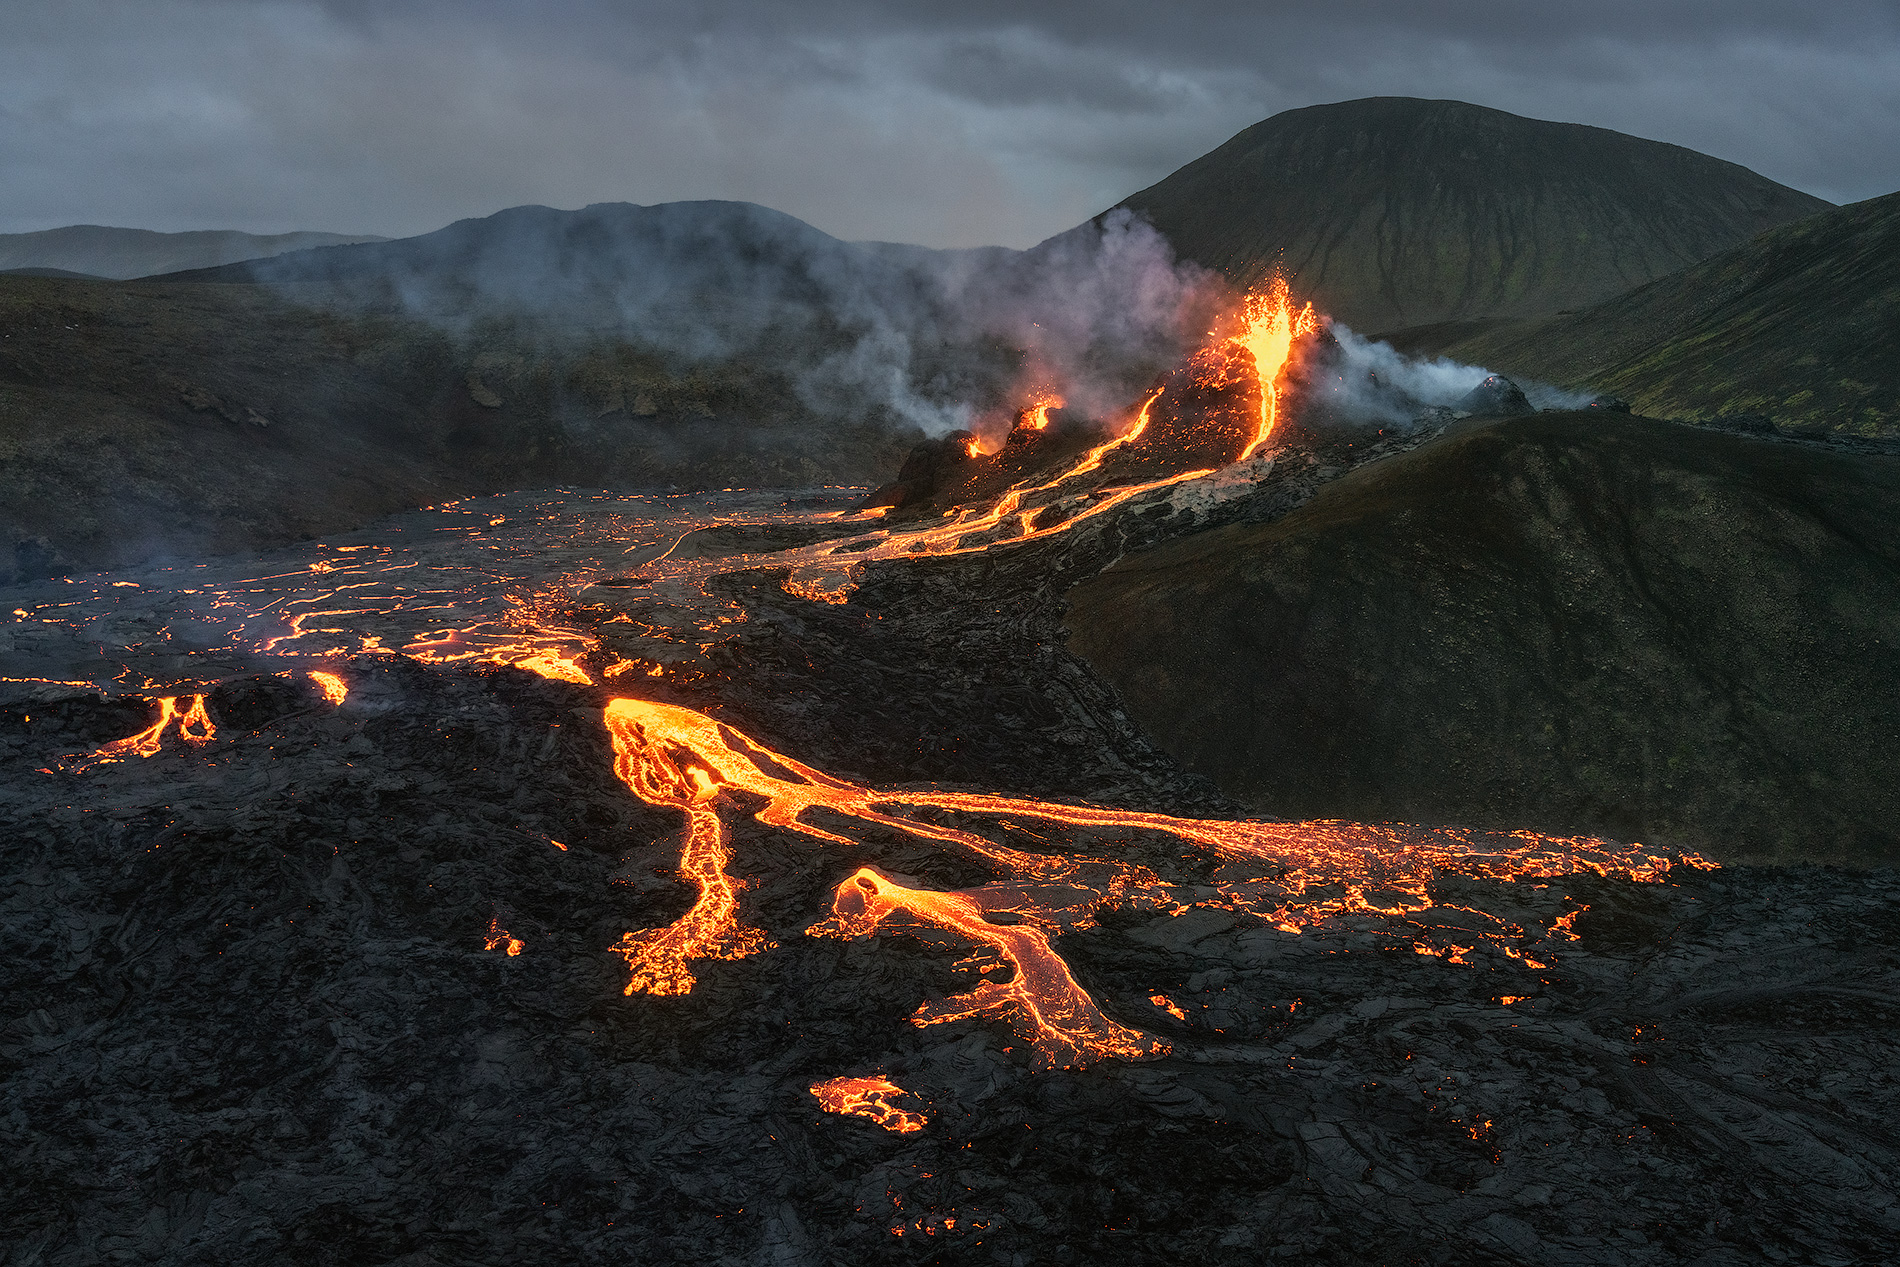 Keilir was formed in an eruption like that at Geldingadalur.